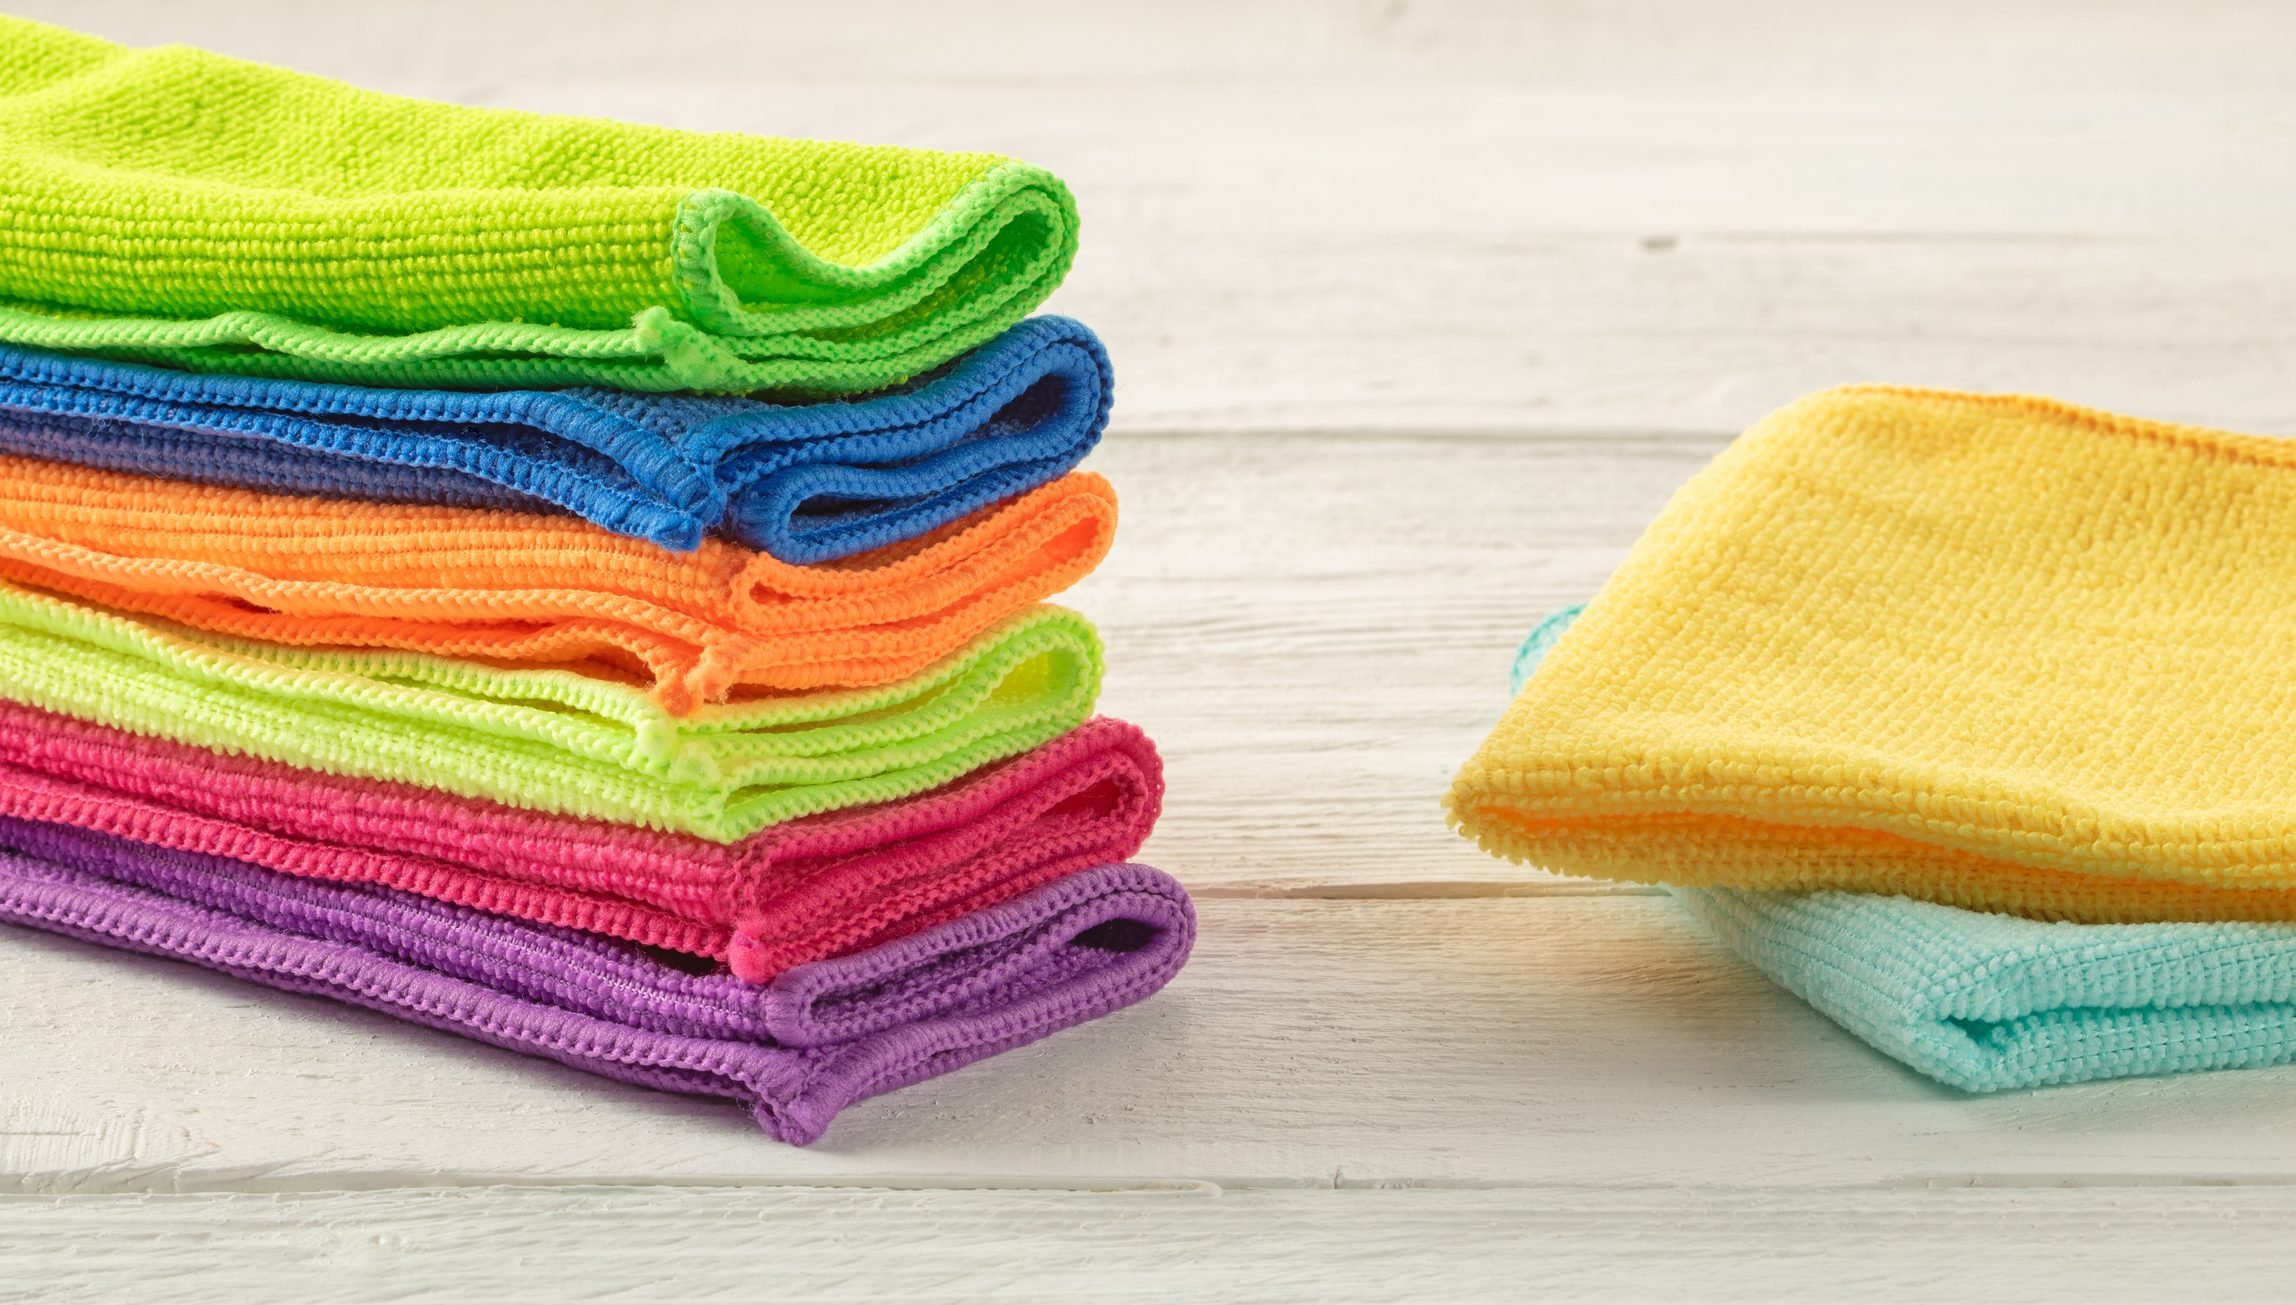 Auto Drive Microfiber Multi-Purpose Microfiber Towel, Cleaning Towel 2  Pack, Assorted Colors